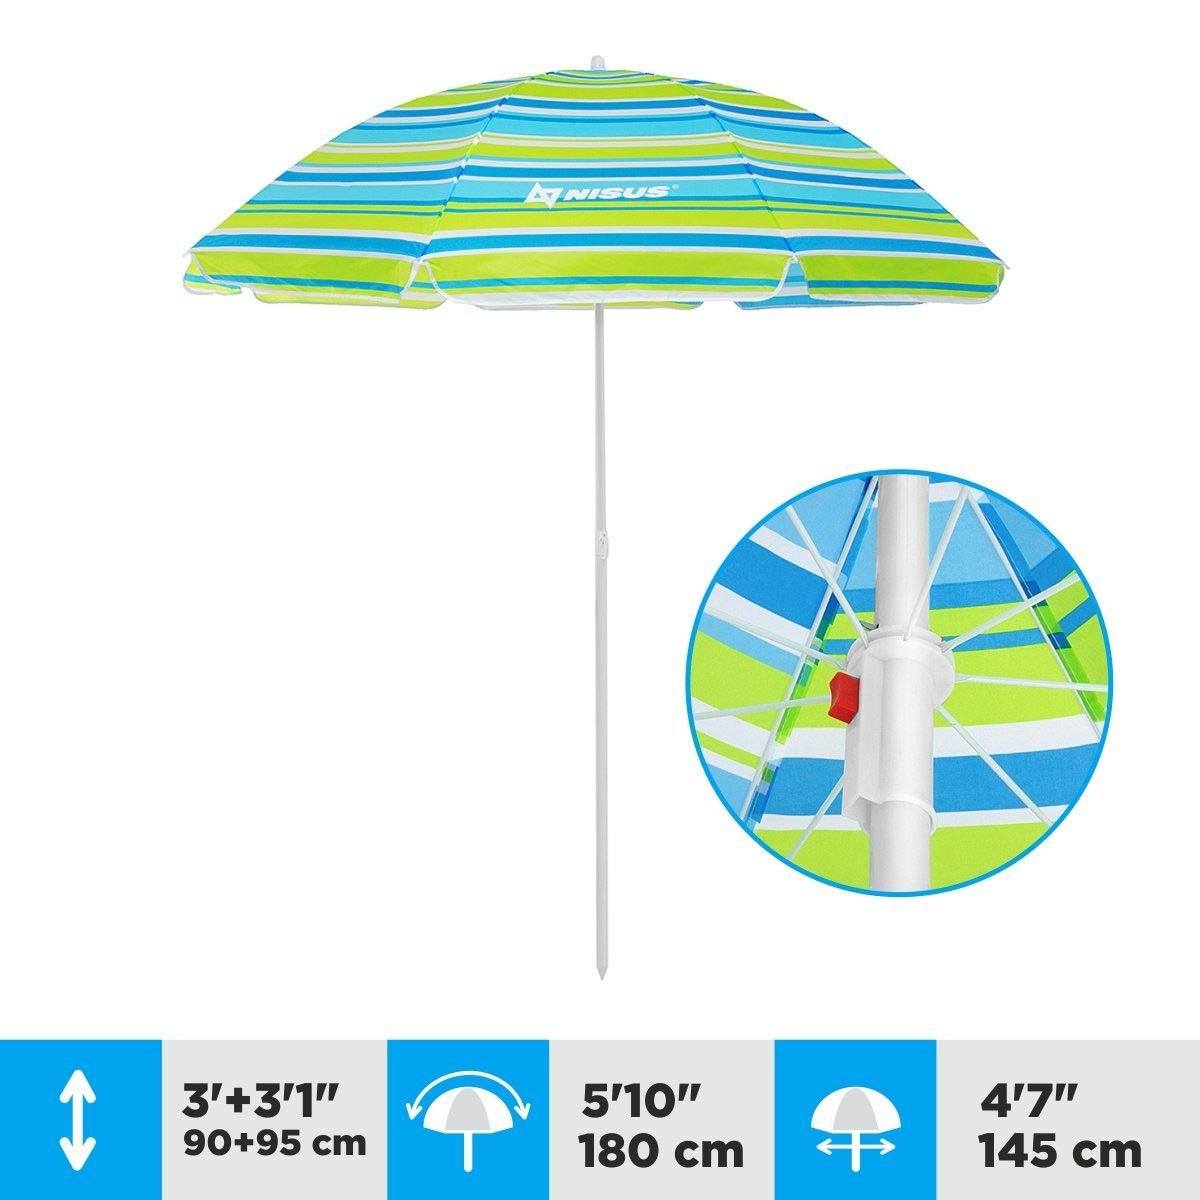 A 4.7 ft Sea-Green Folding Beach Umbrella is 6.1 ft high